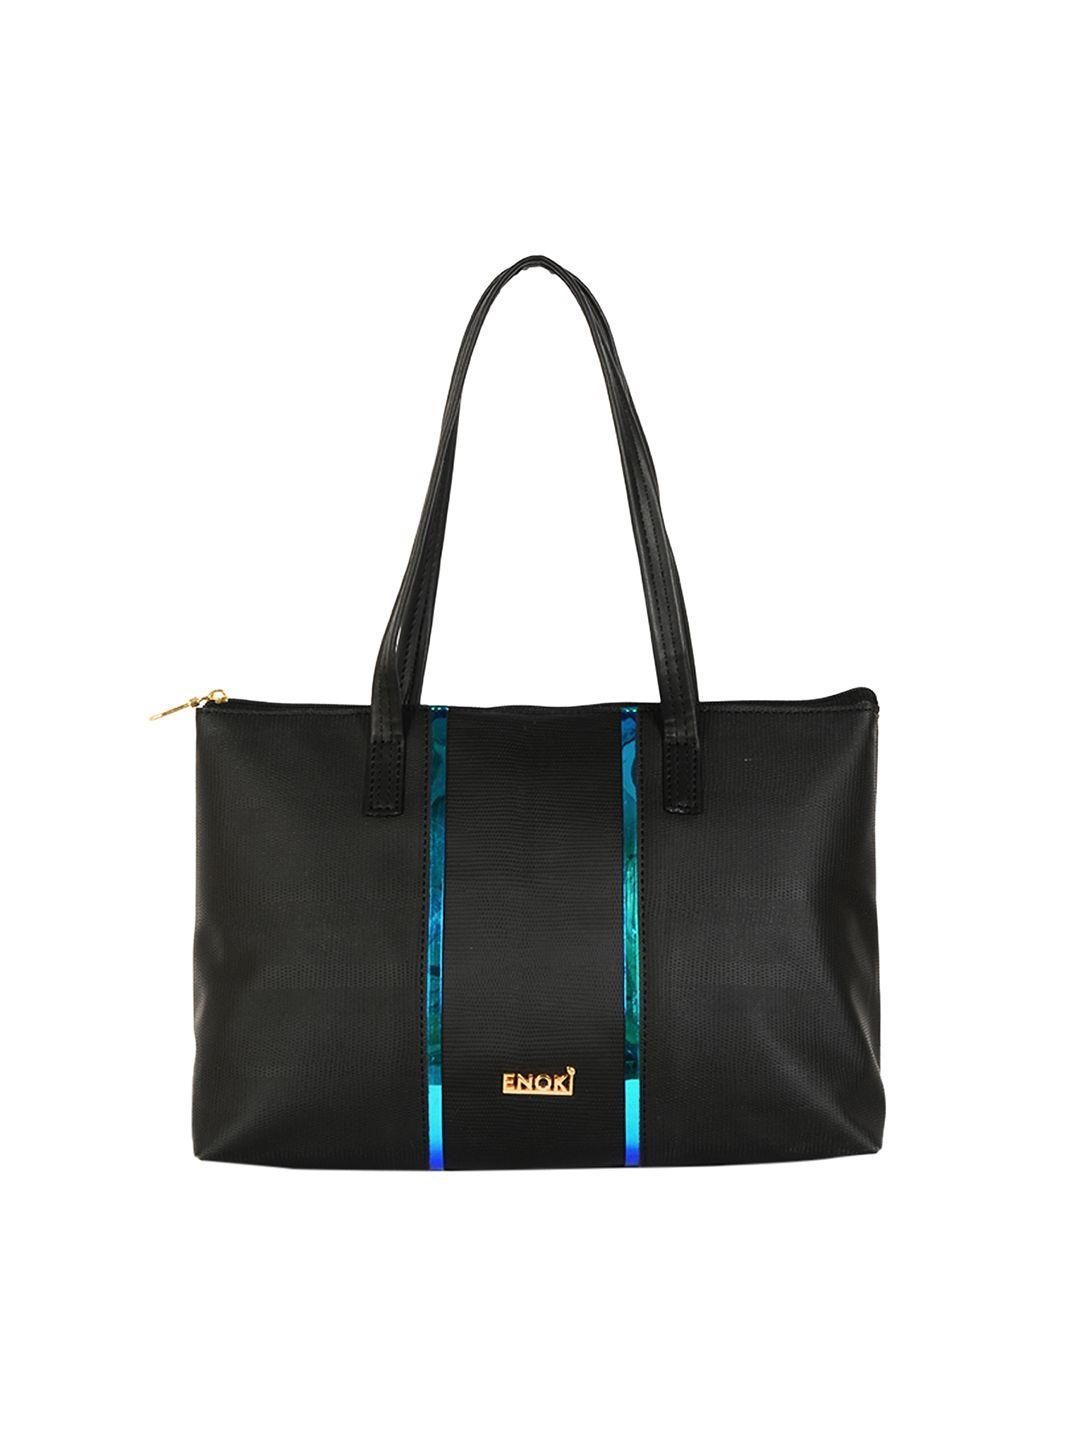 enoki black structured tote bag